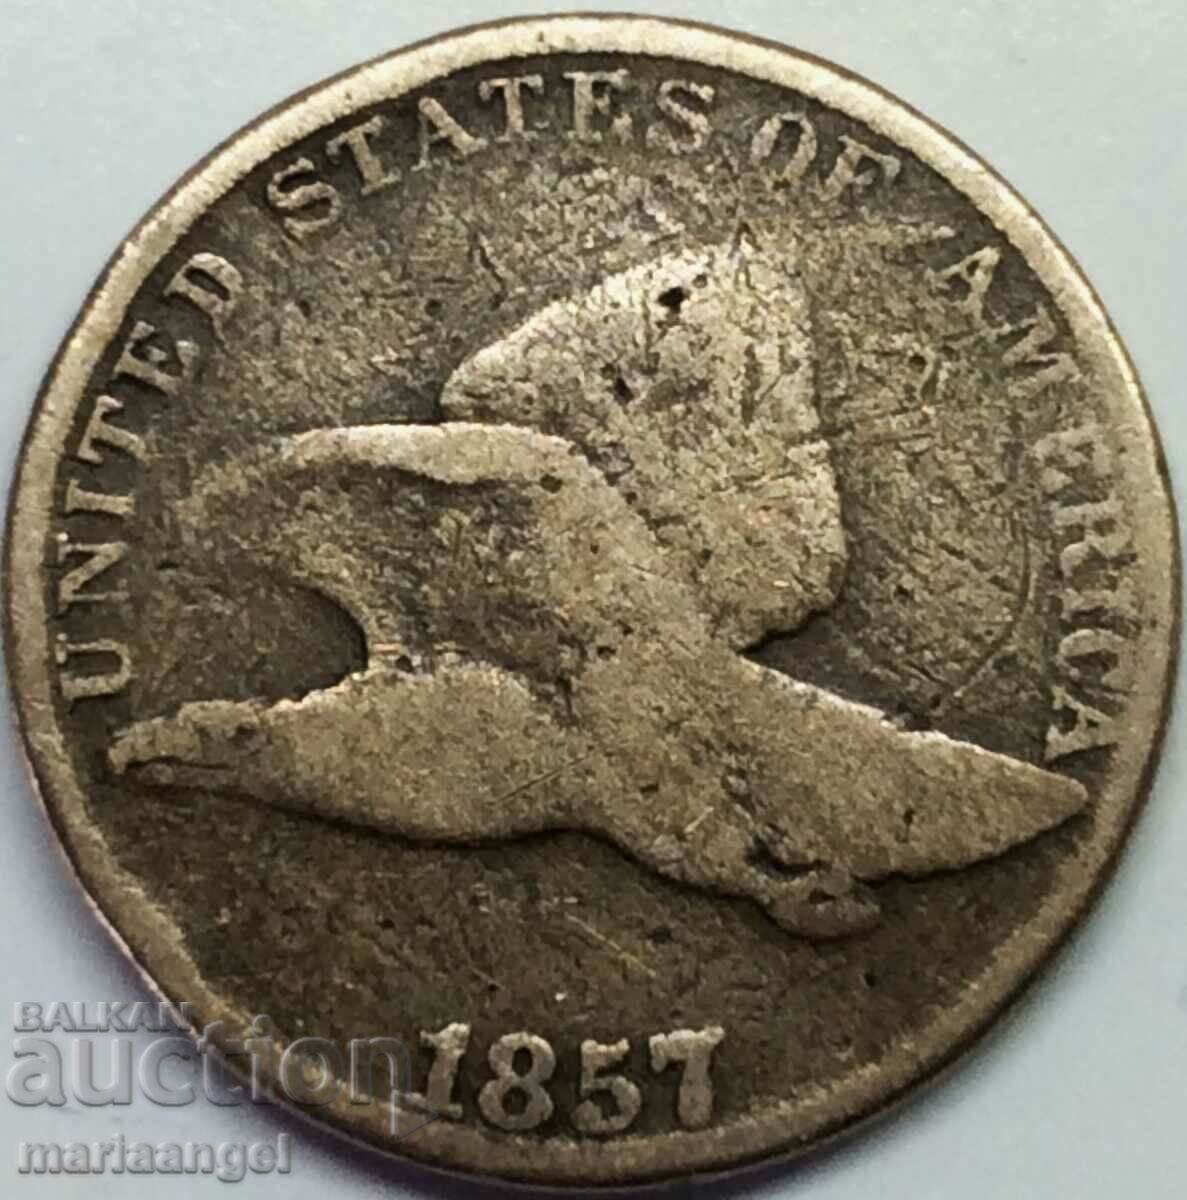 USA 1 cent 1872 Flying Eagle - quite rare